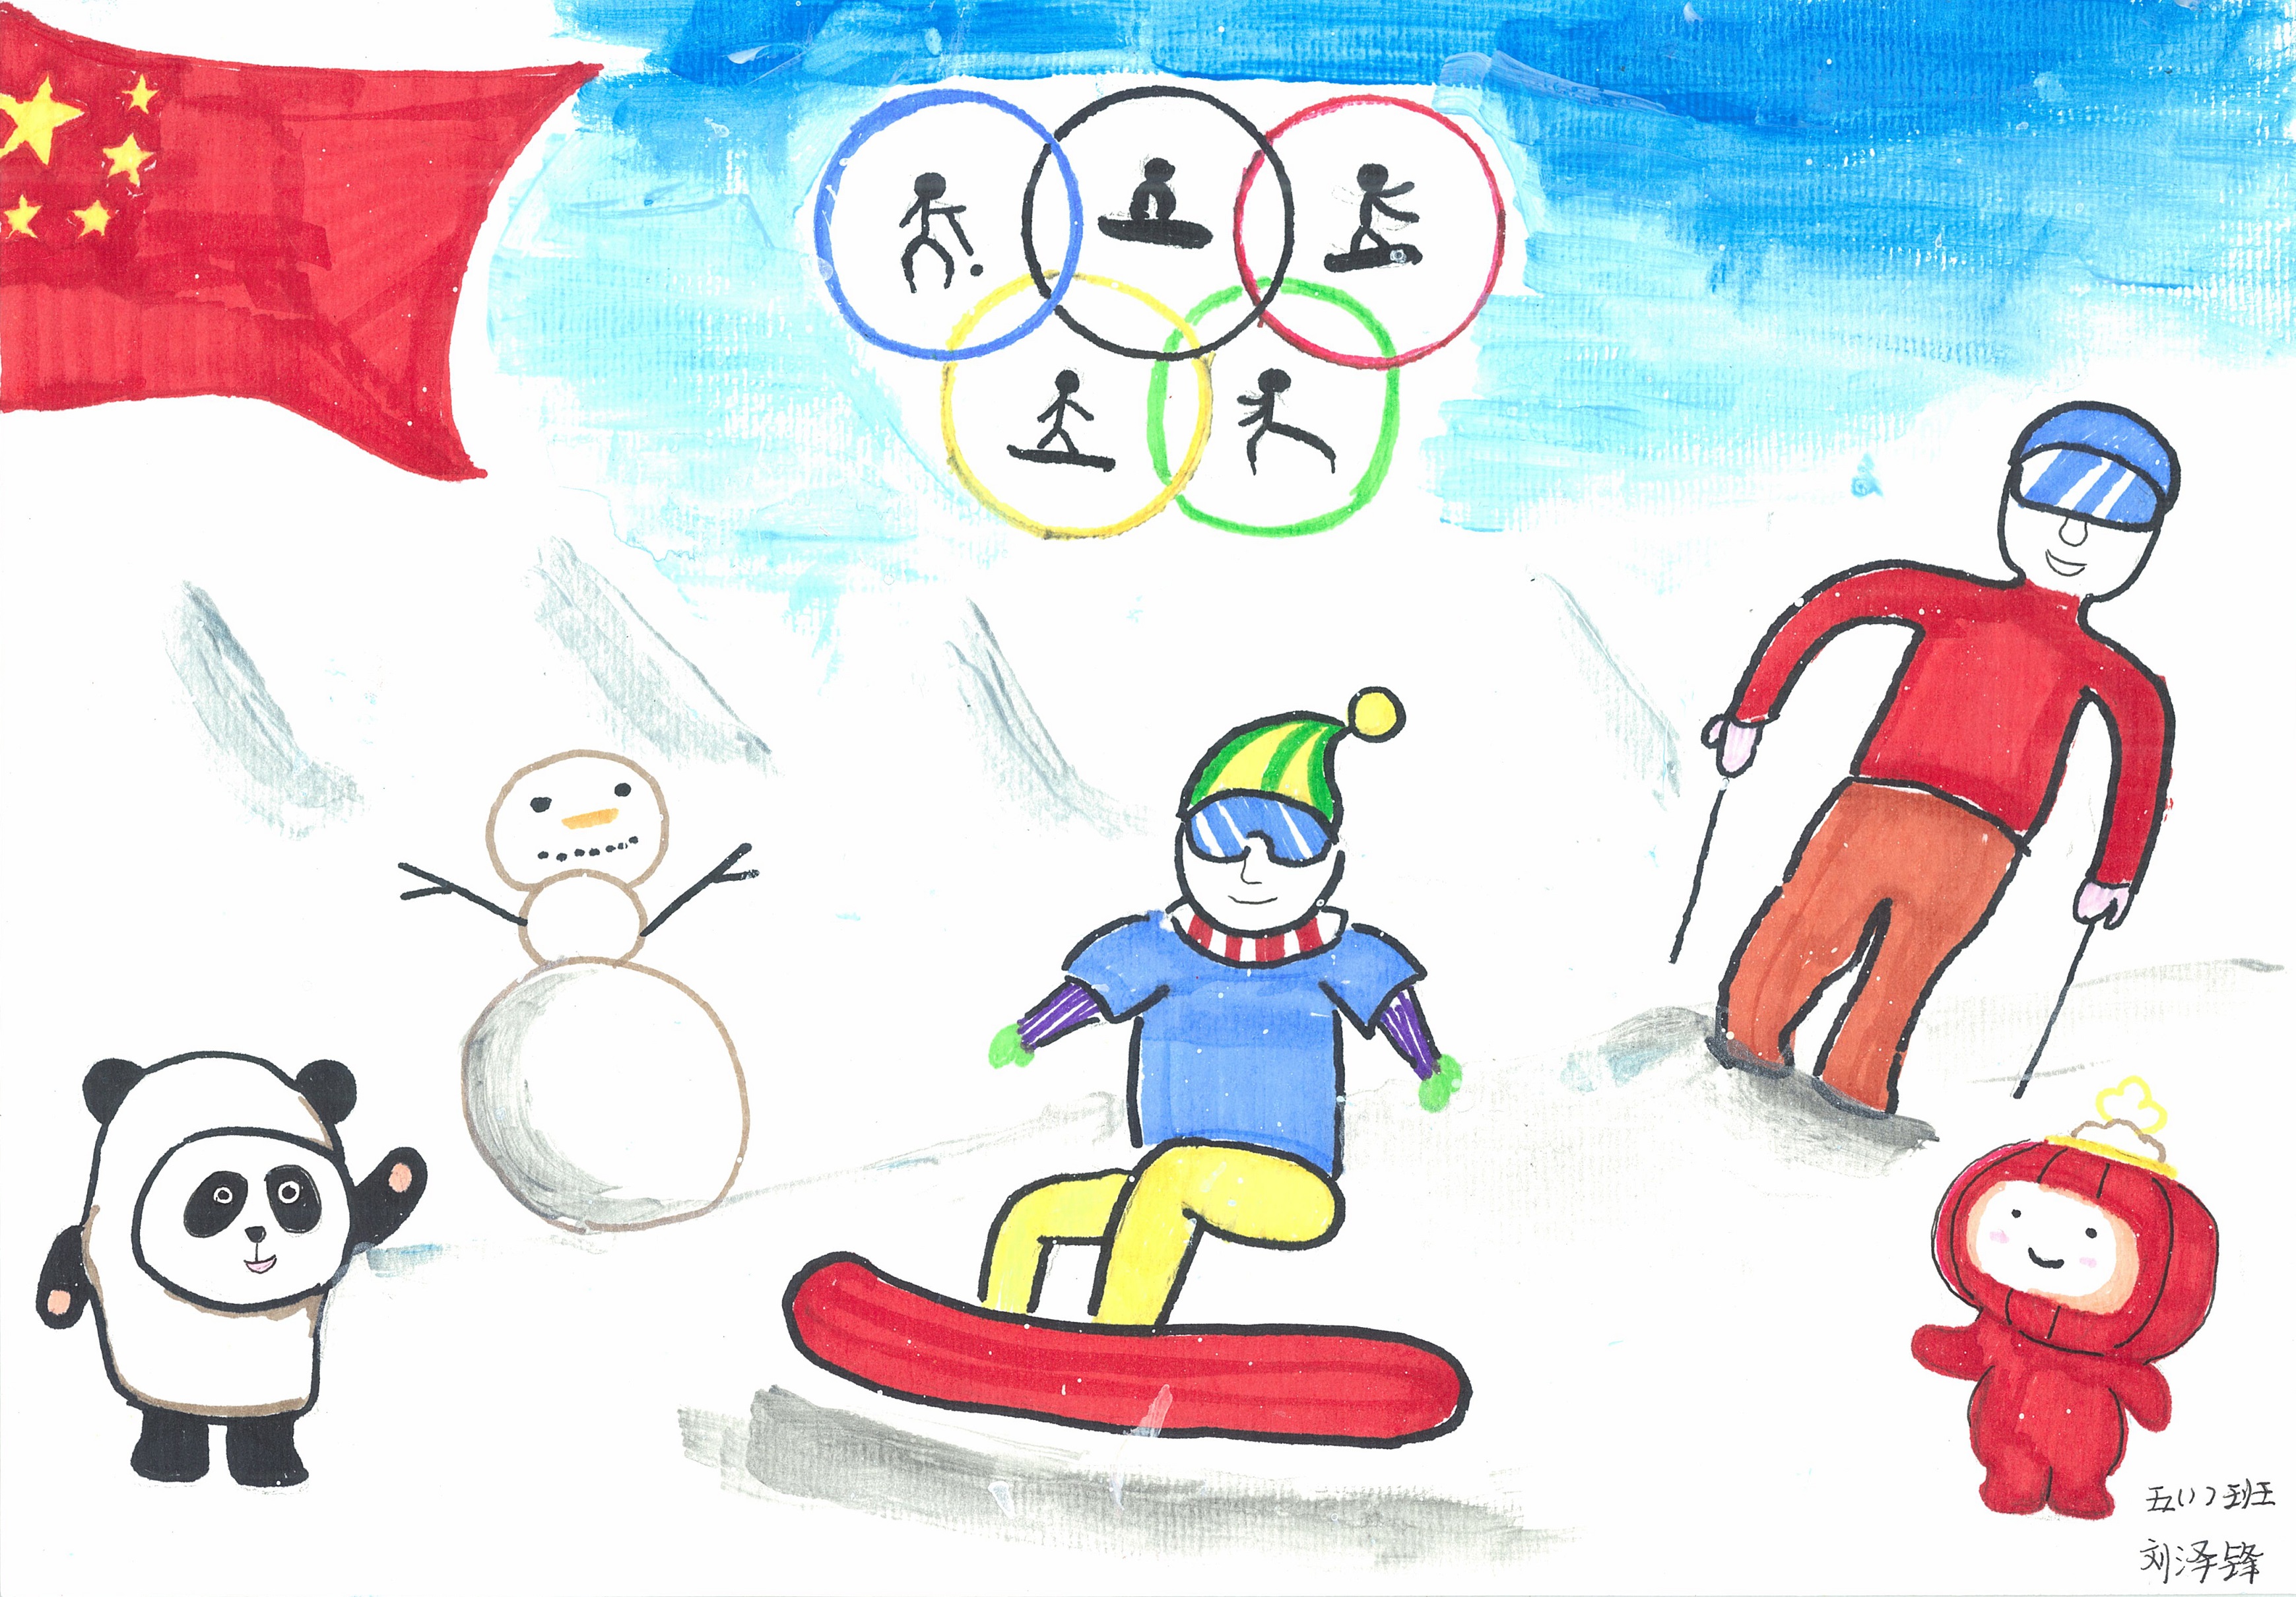 《我心中的冬奥荣耀时刻》Glory moments of the Winter Olympics in my heart +刘泽锋 Liu Zefeng